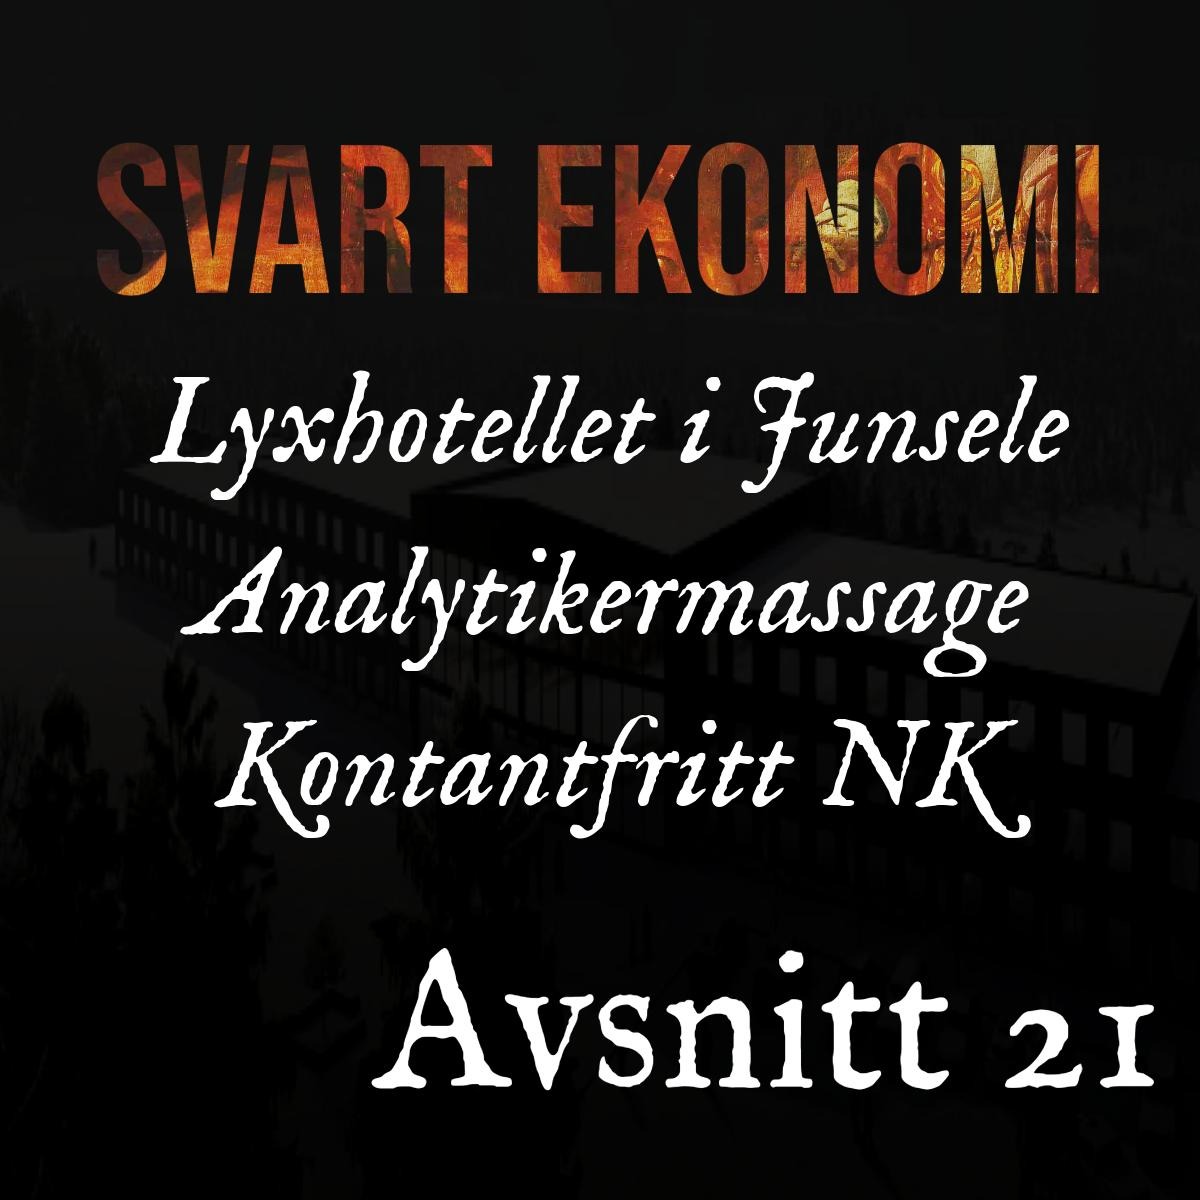 image from 21 - Nyhetssvep - Lyxhotellet i Junselse, Hexatronics analytikermassage och NKs kontantstopp